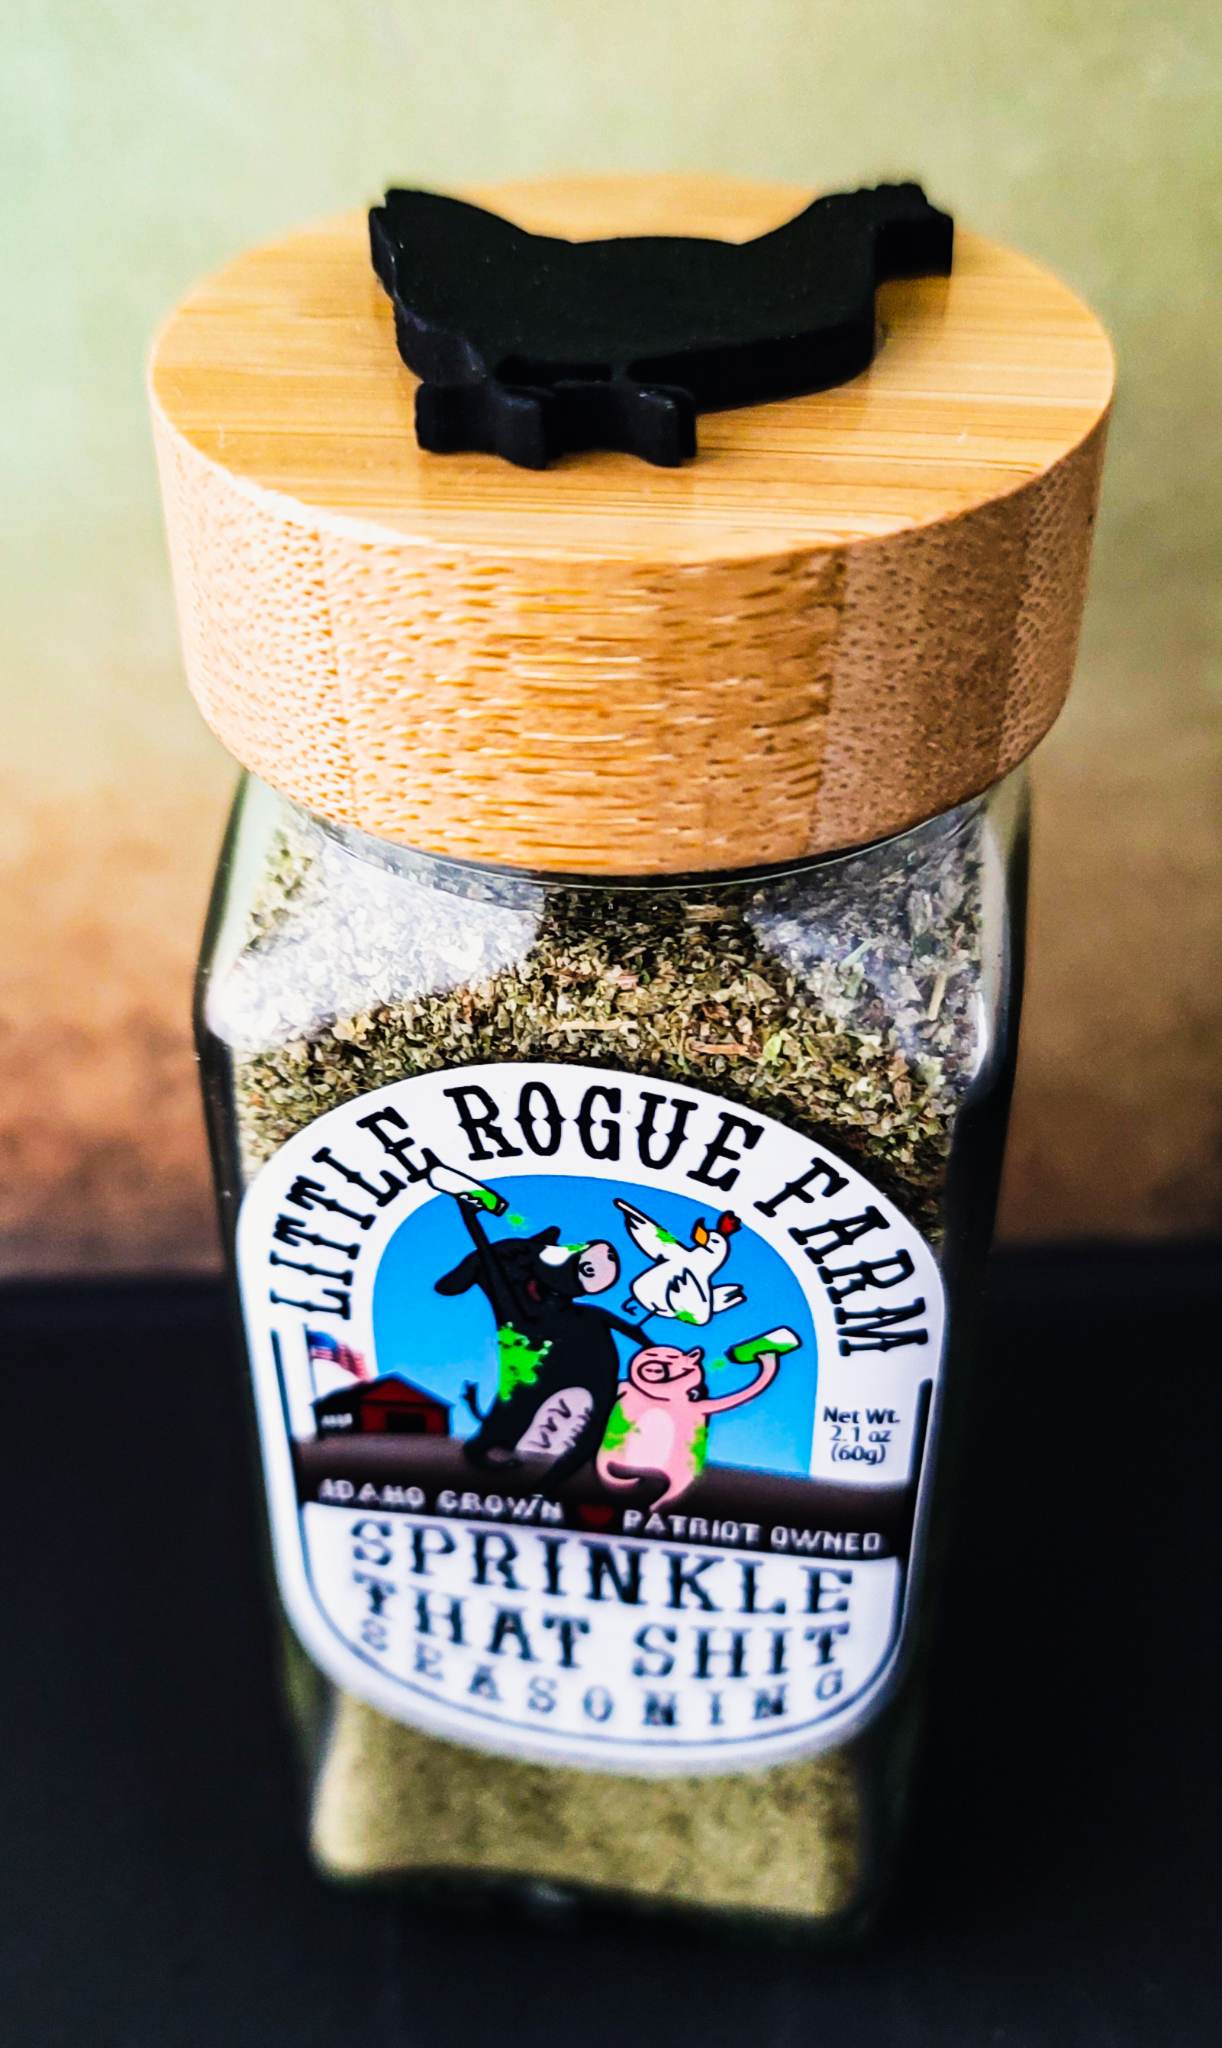 Sprinkle That Shit! Seasoning. It's Back! – Little Rogue Farm